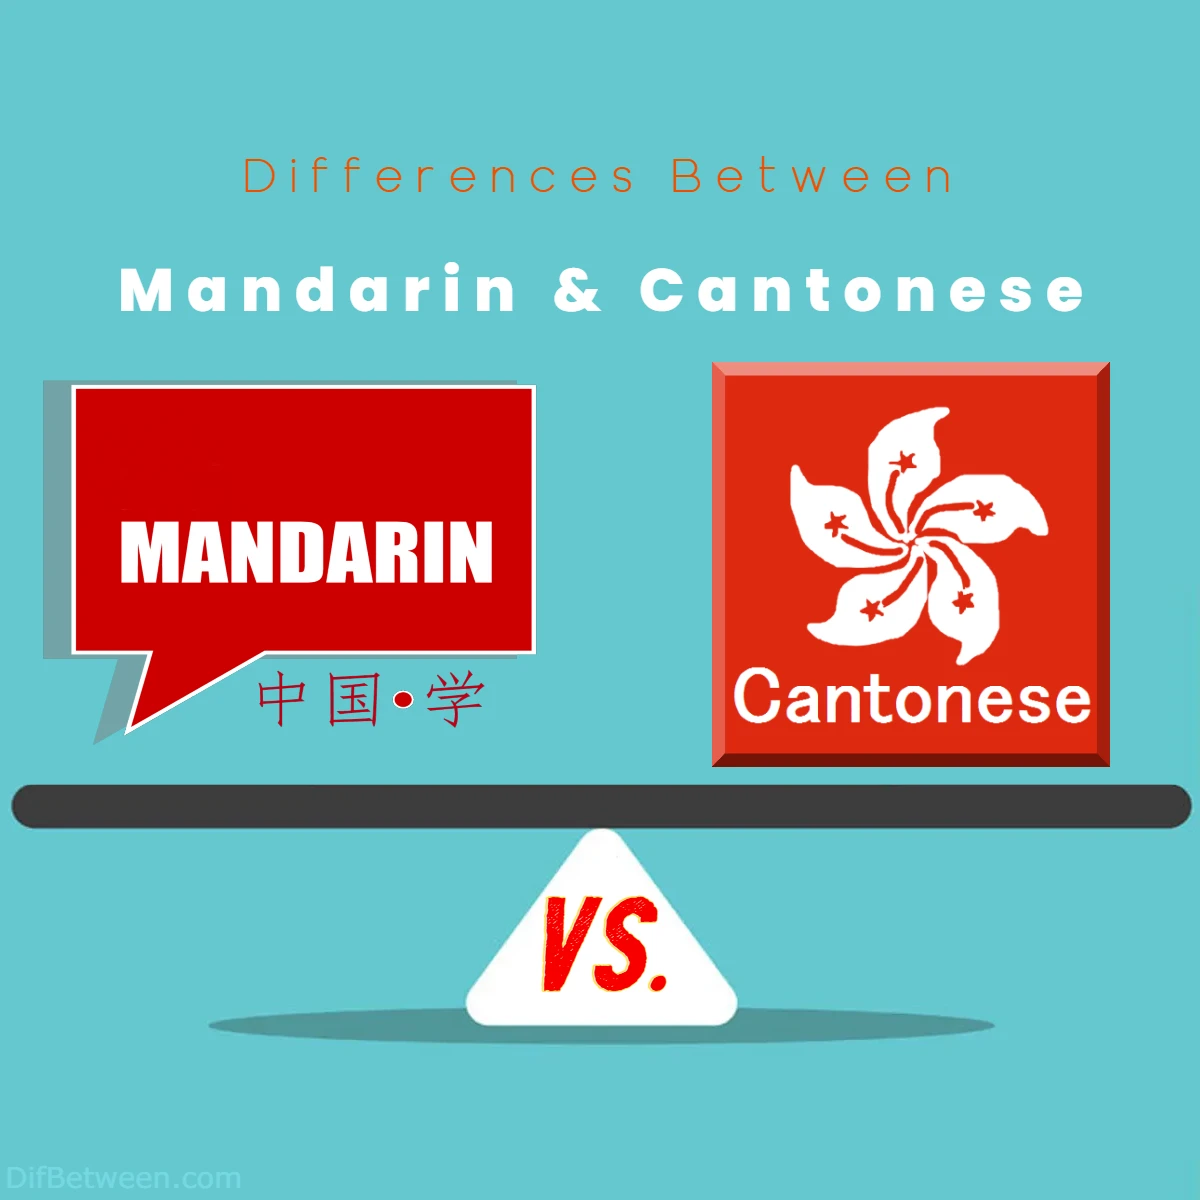 Differences Between Mandarin vs Cantonese